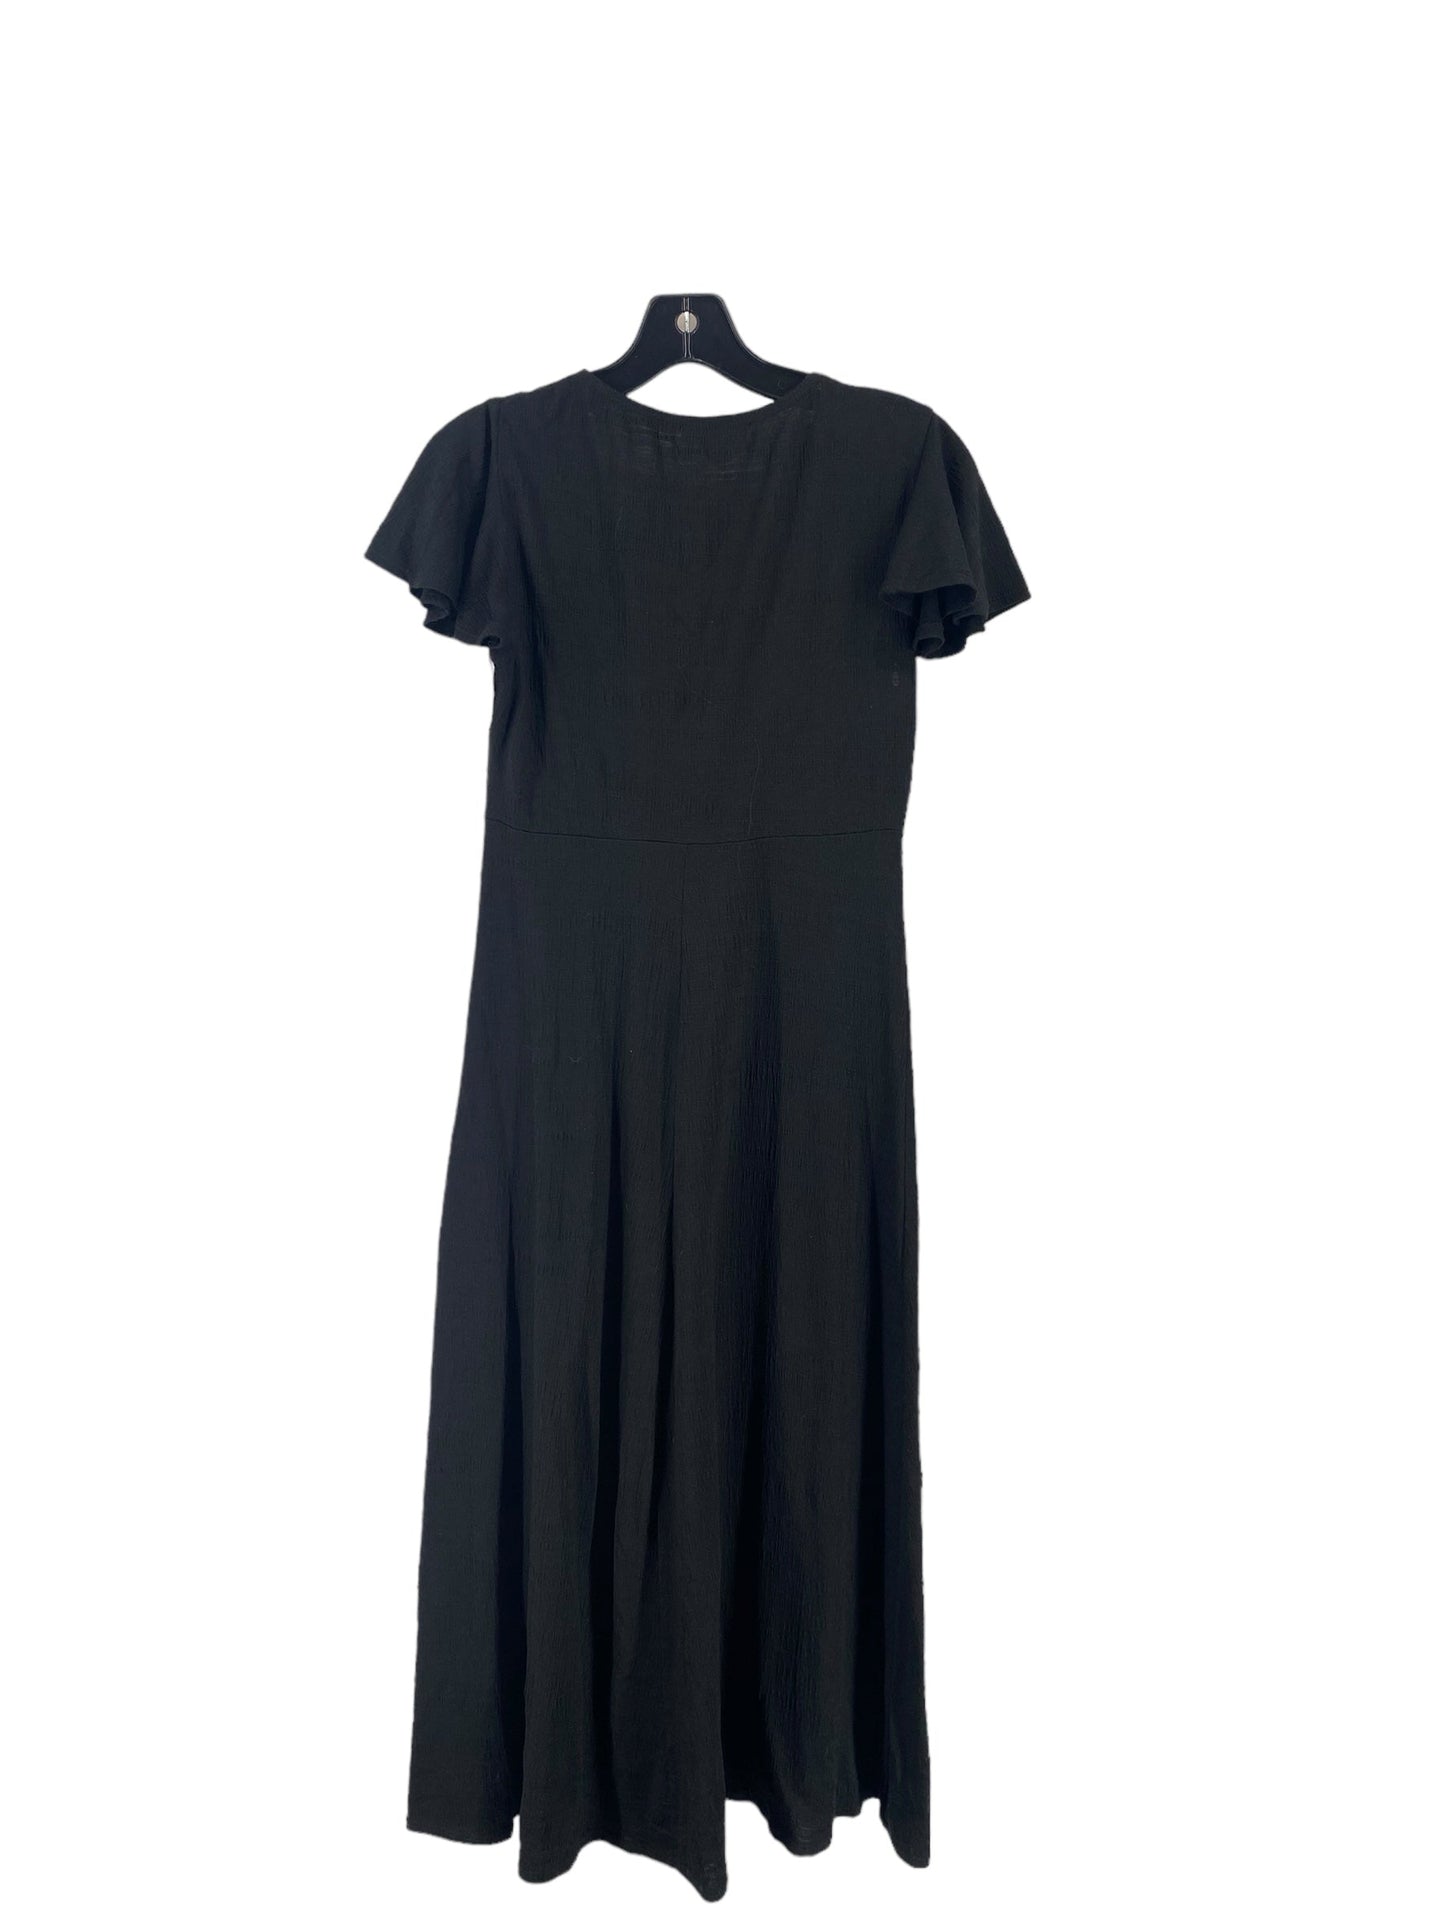 Black Dress Casual Midi Max Studio, Size Xs